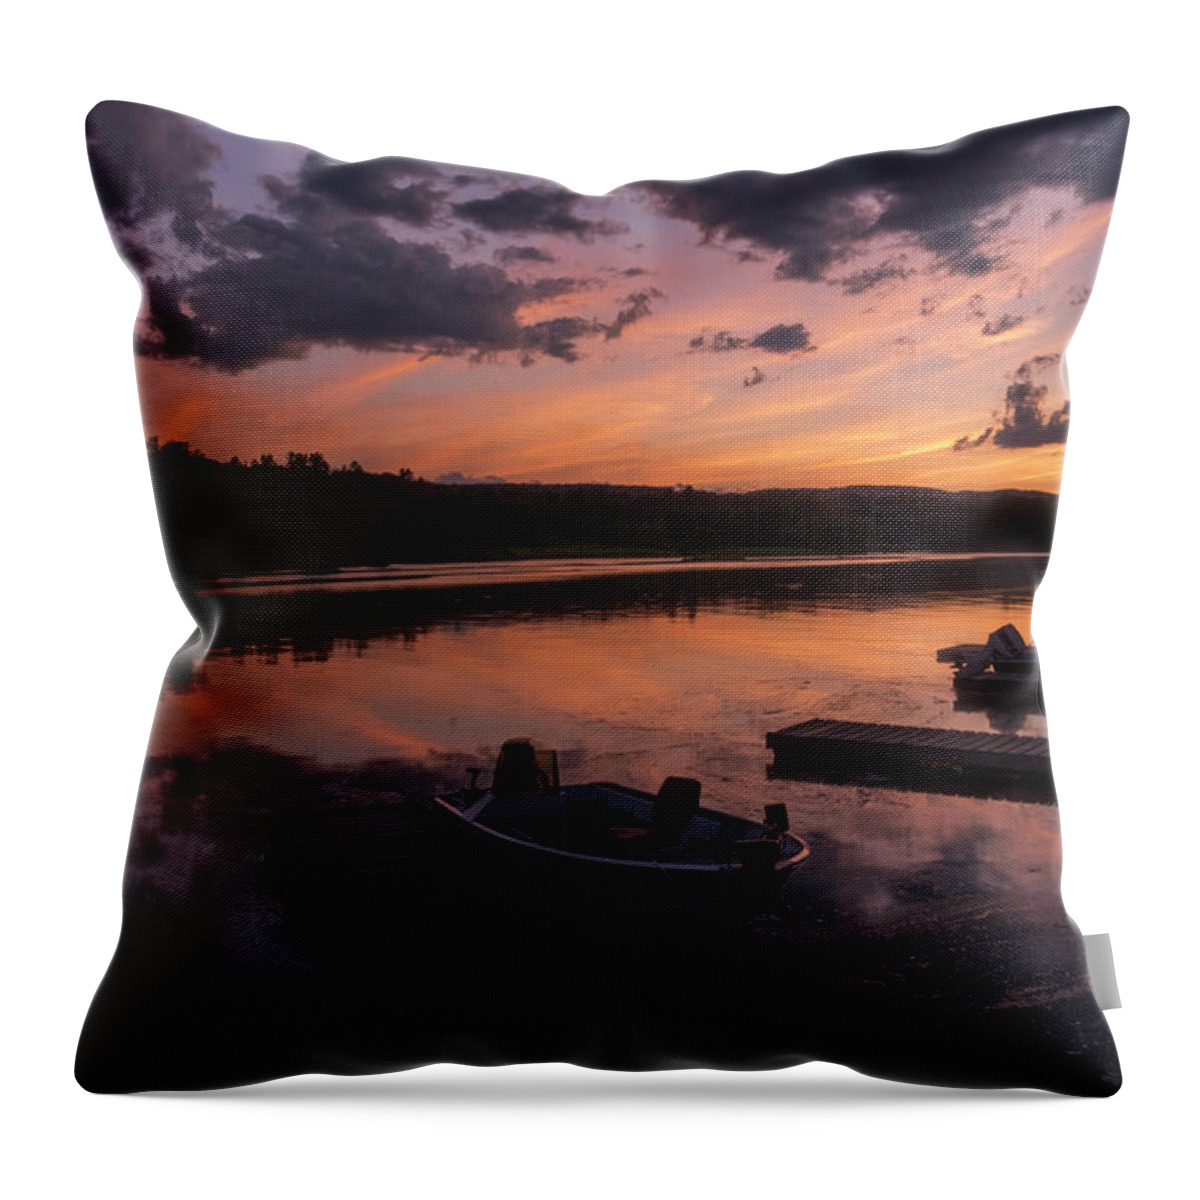 He Brattleboro Retreat Meadows Throw Pillow featuring the photograph Marina Sunset III by Tom Singleton